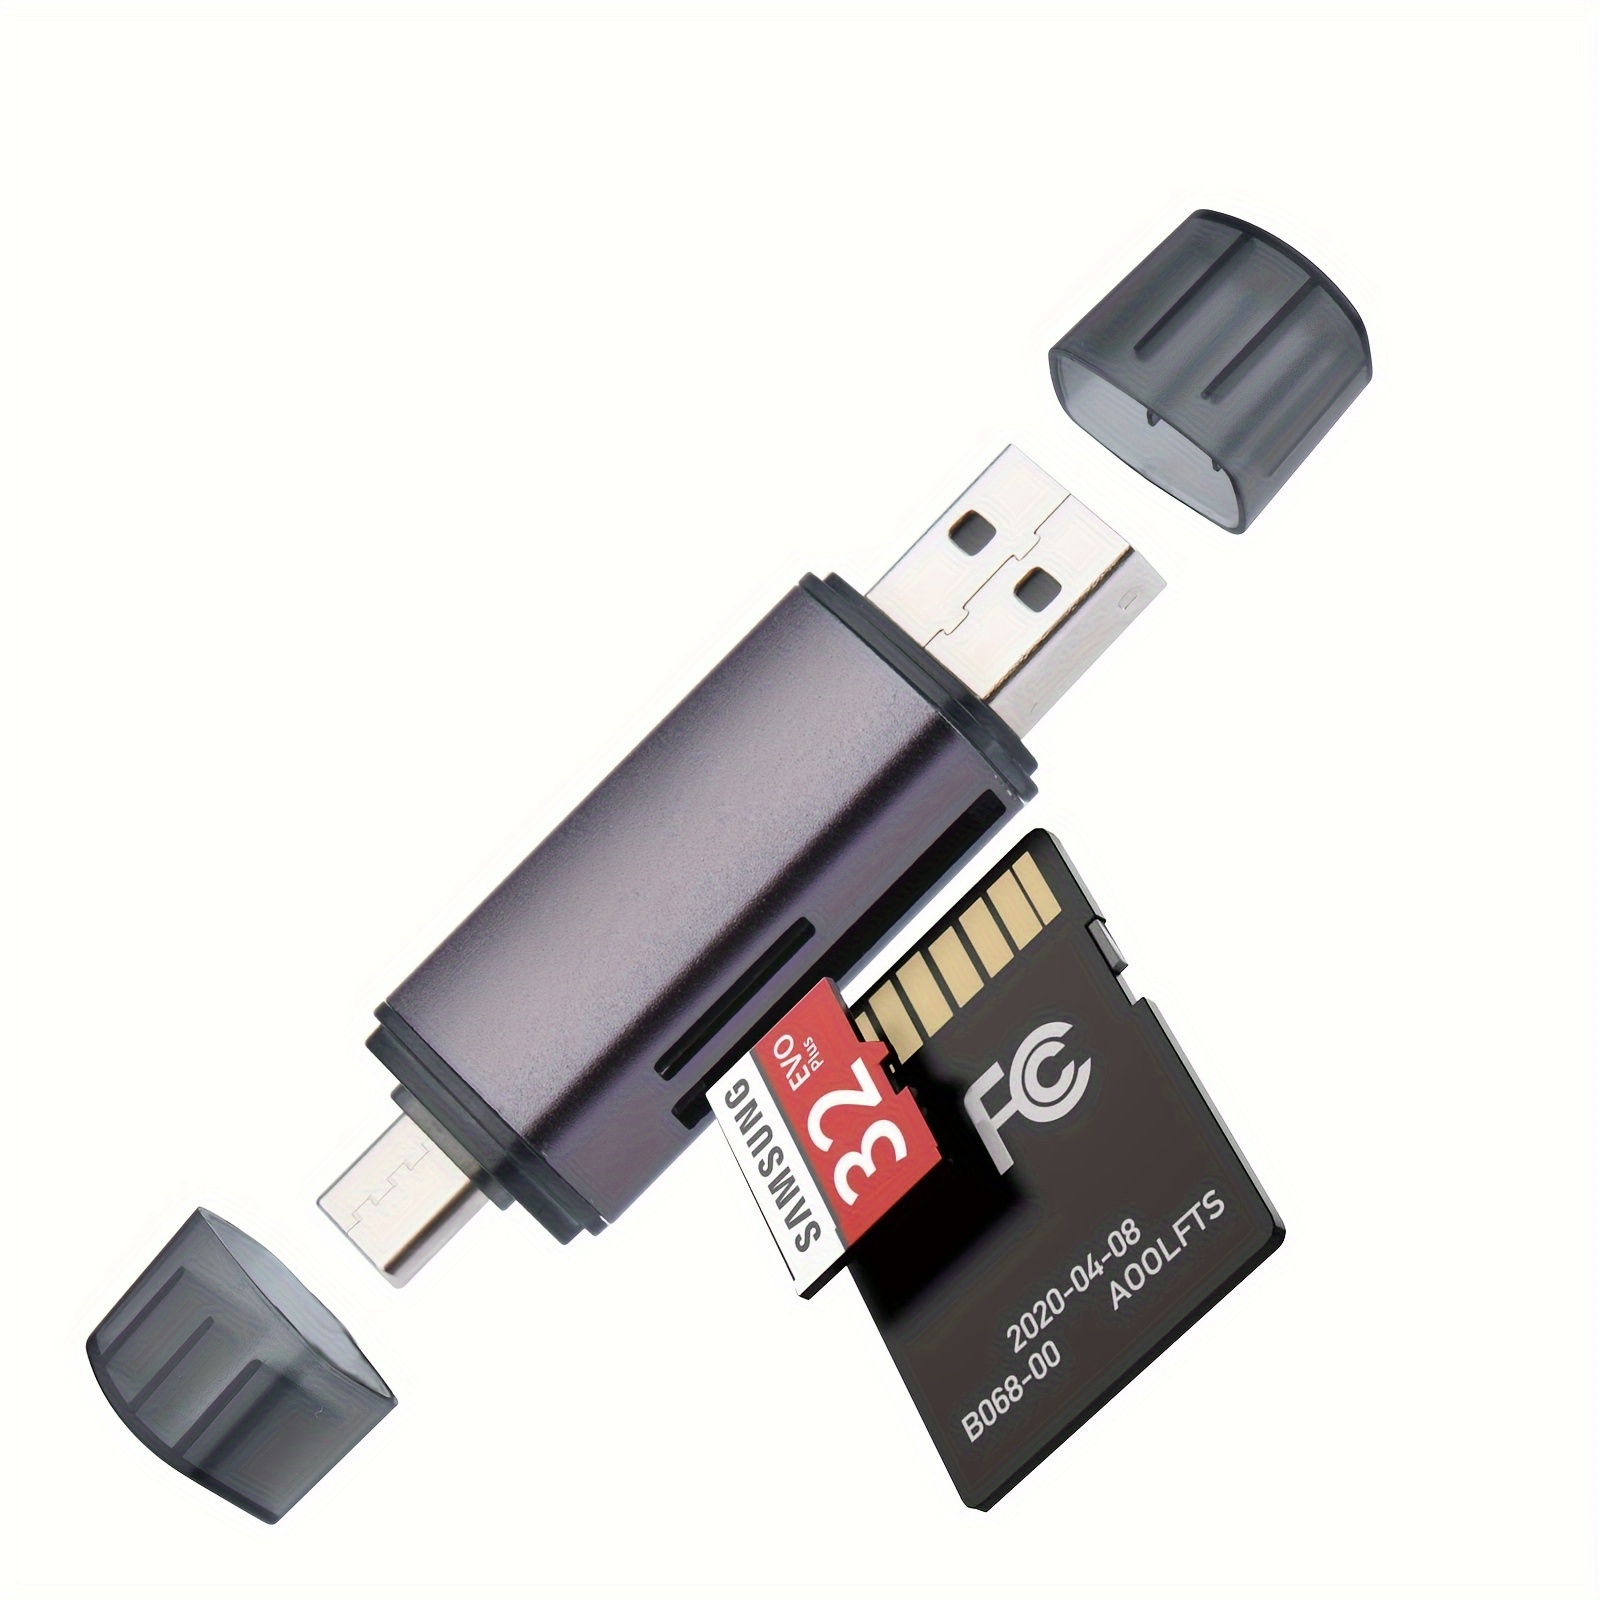 Kruidvat Carte Micro SD 16Go